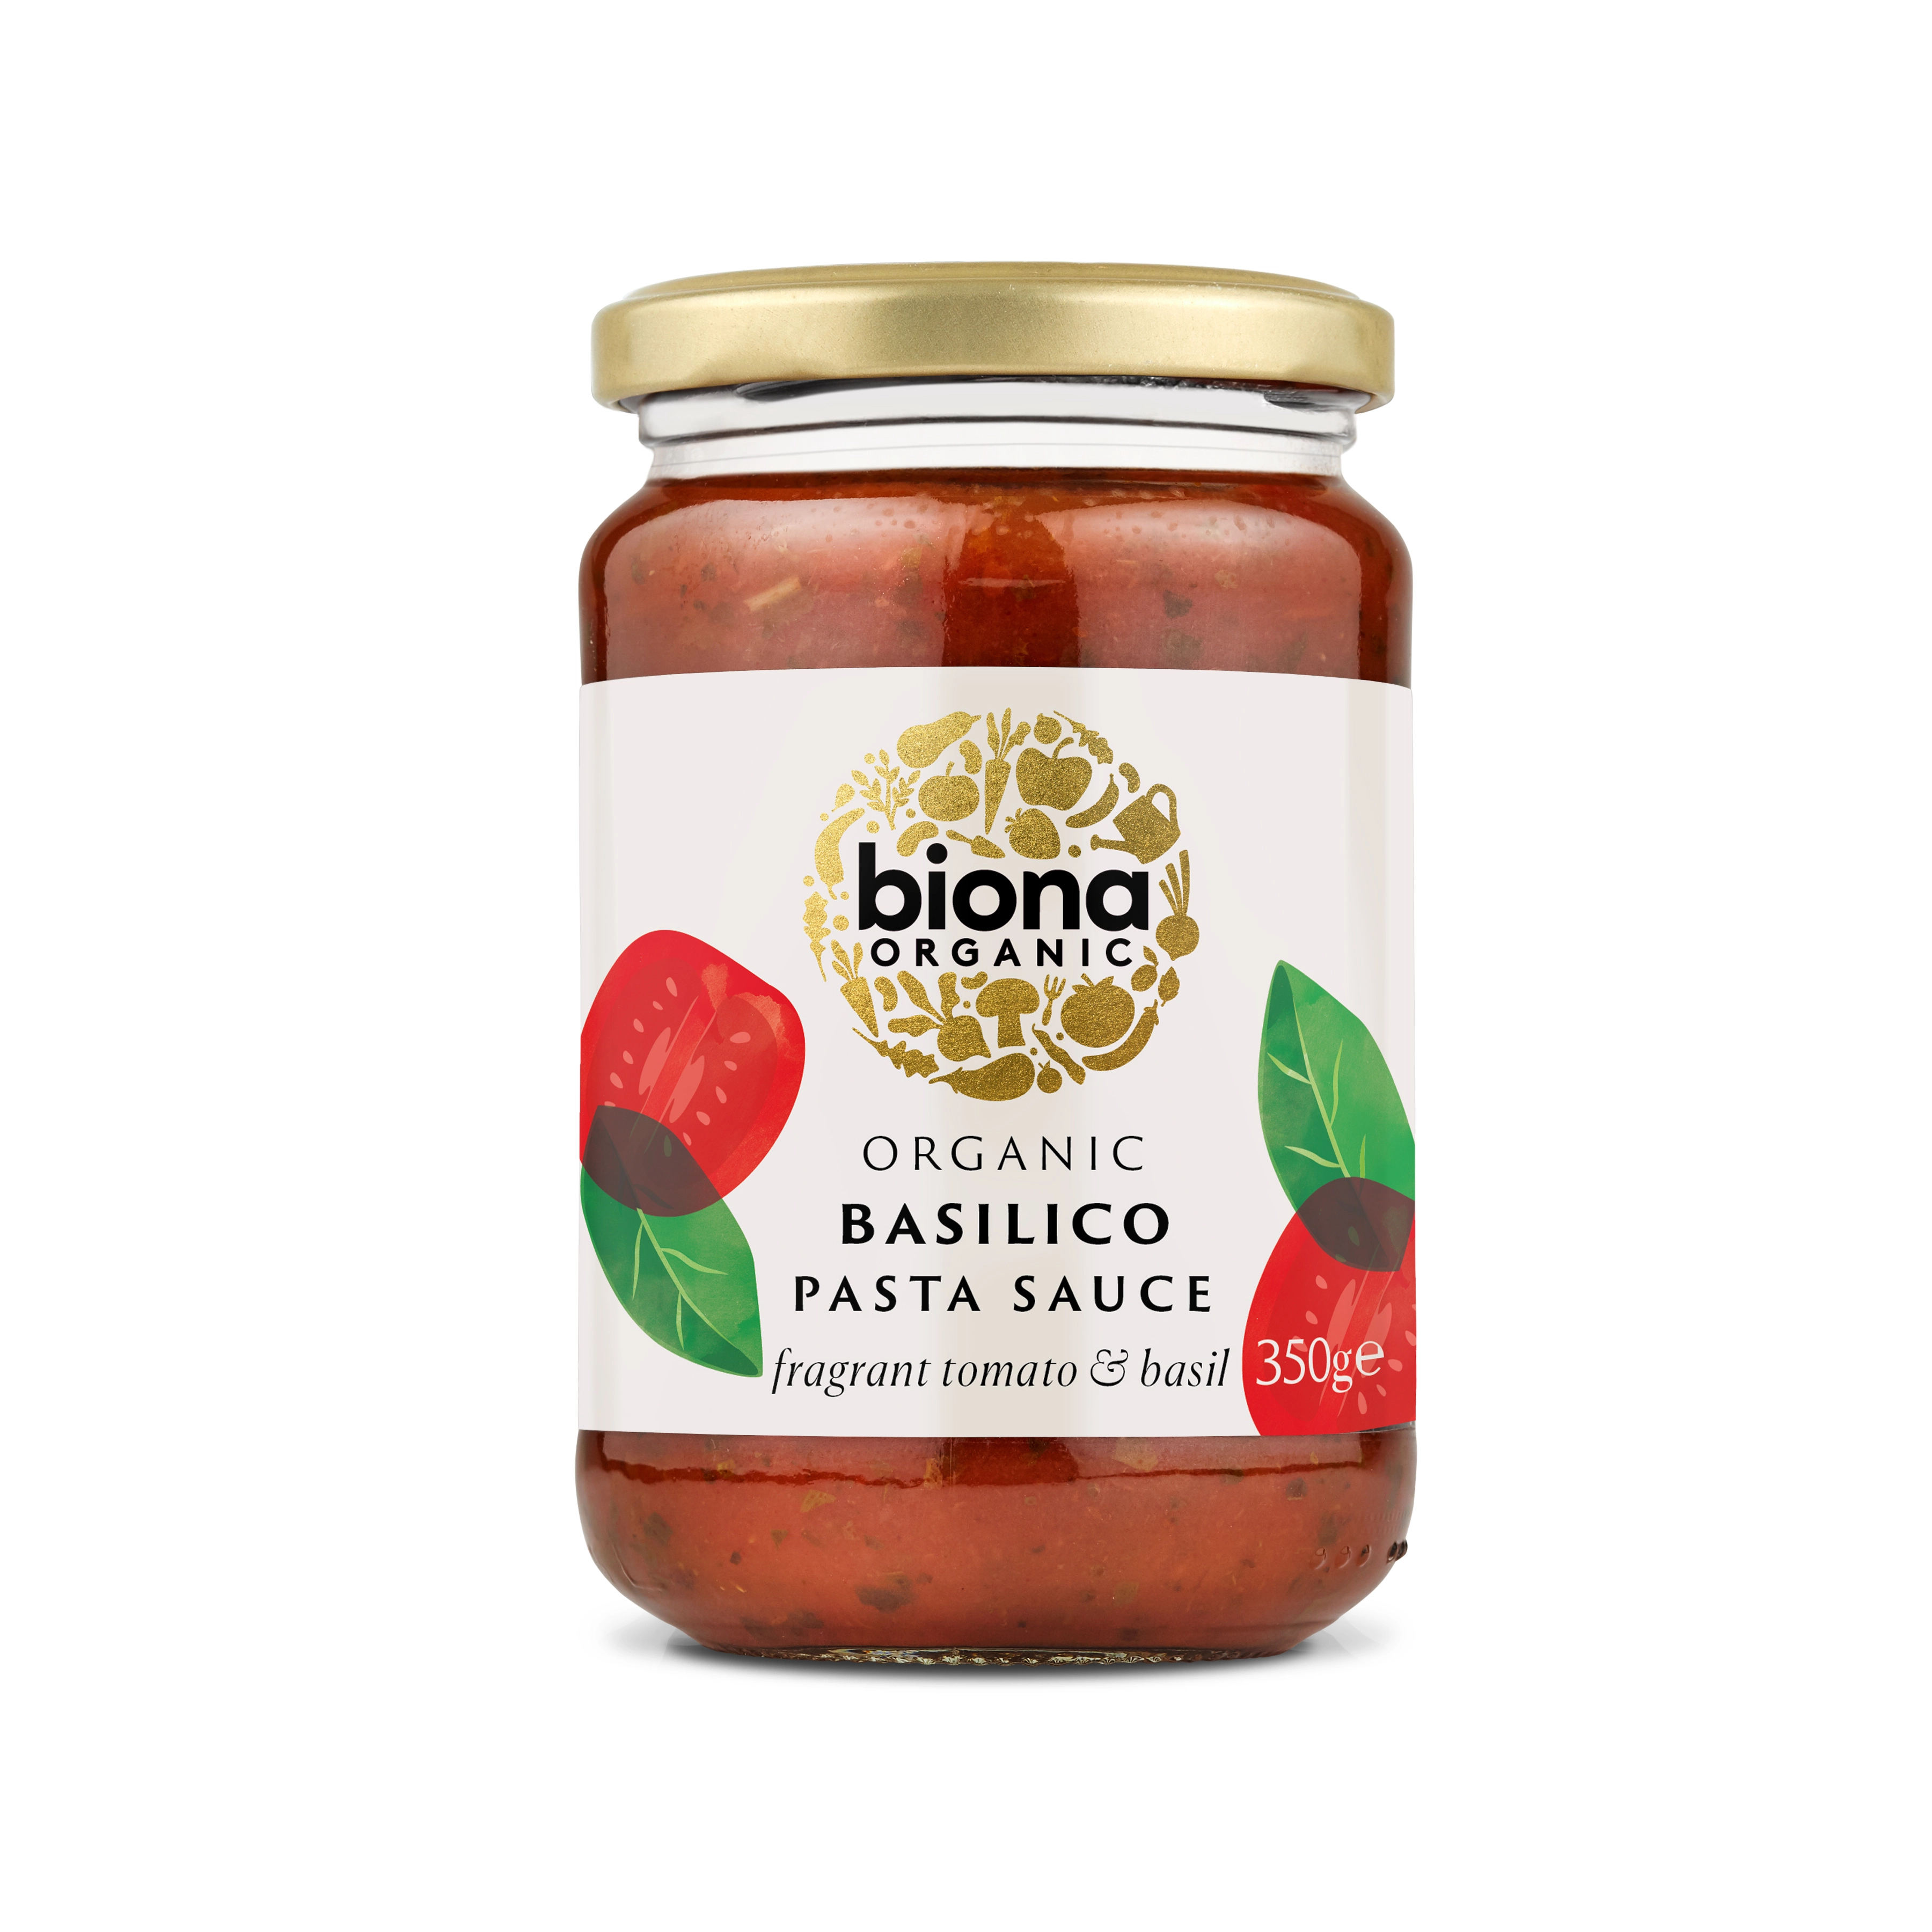 Biona Basilico - Tomato & Basil Sauce Organic - Vegan 350g